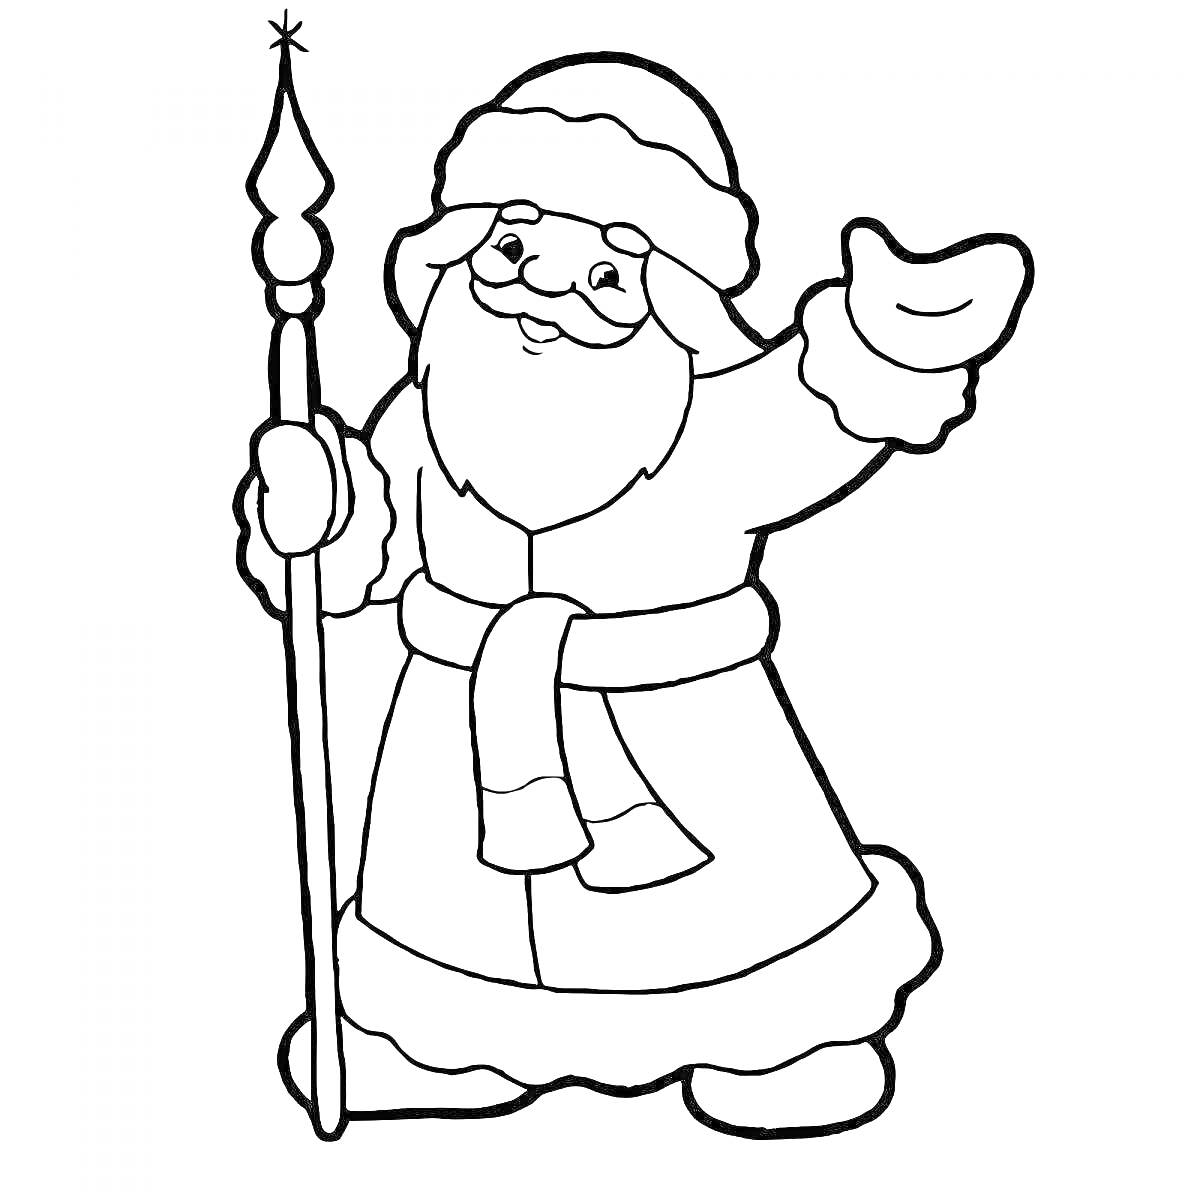 Раскраска Дед Мороз с посохом, рука поднята в приветствии